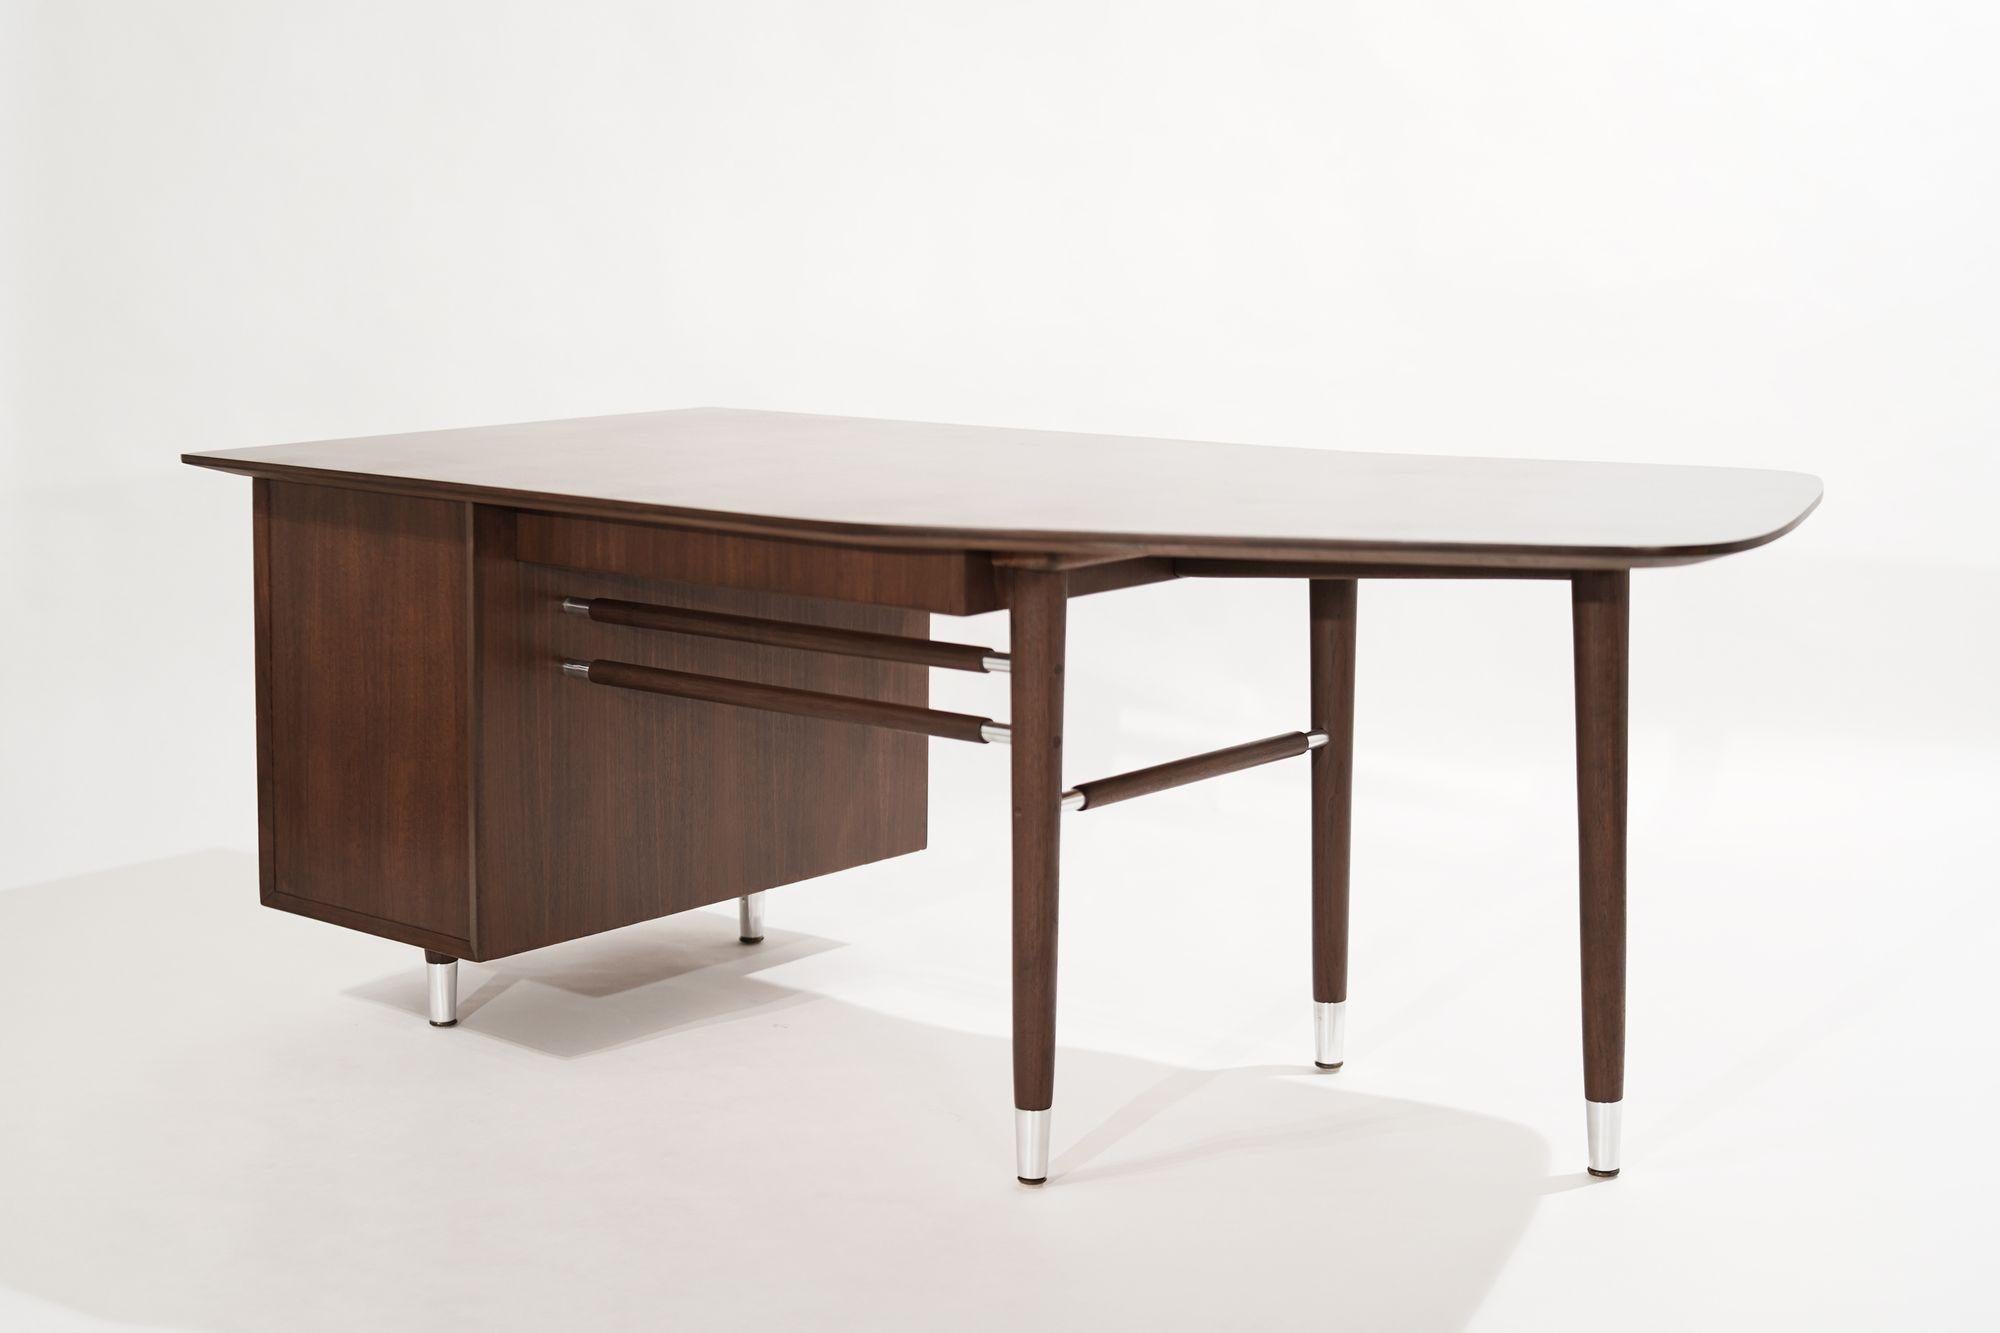 20th Century Asymmetric Walnut Desk w/ Nickel Accents, C. 1950s For Sale